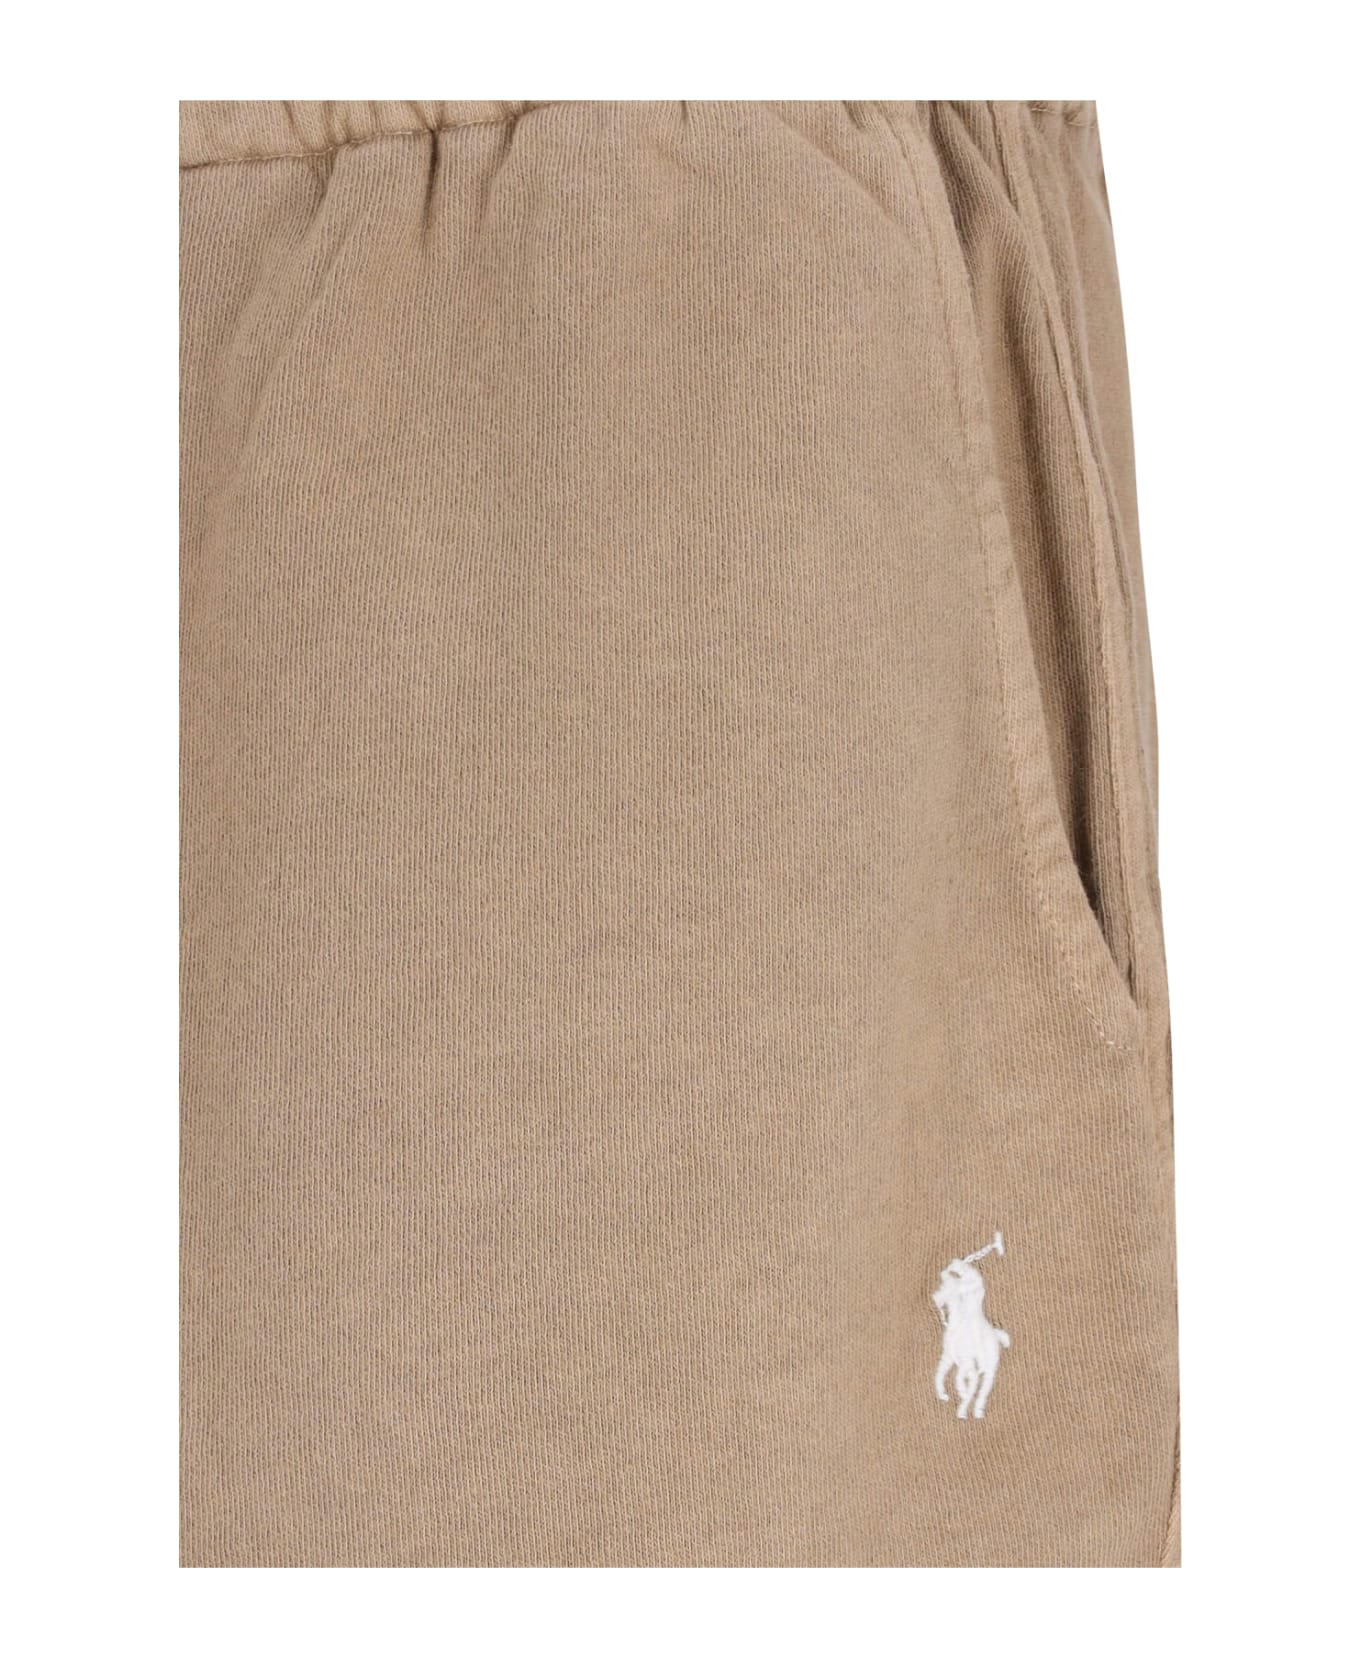 Polo Ralph Lauren Logo Shorts - Beige